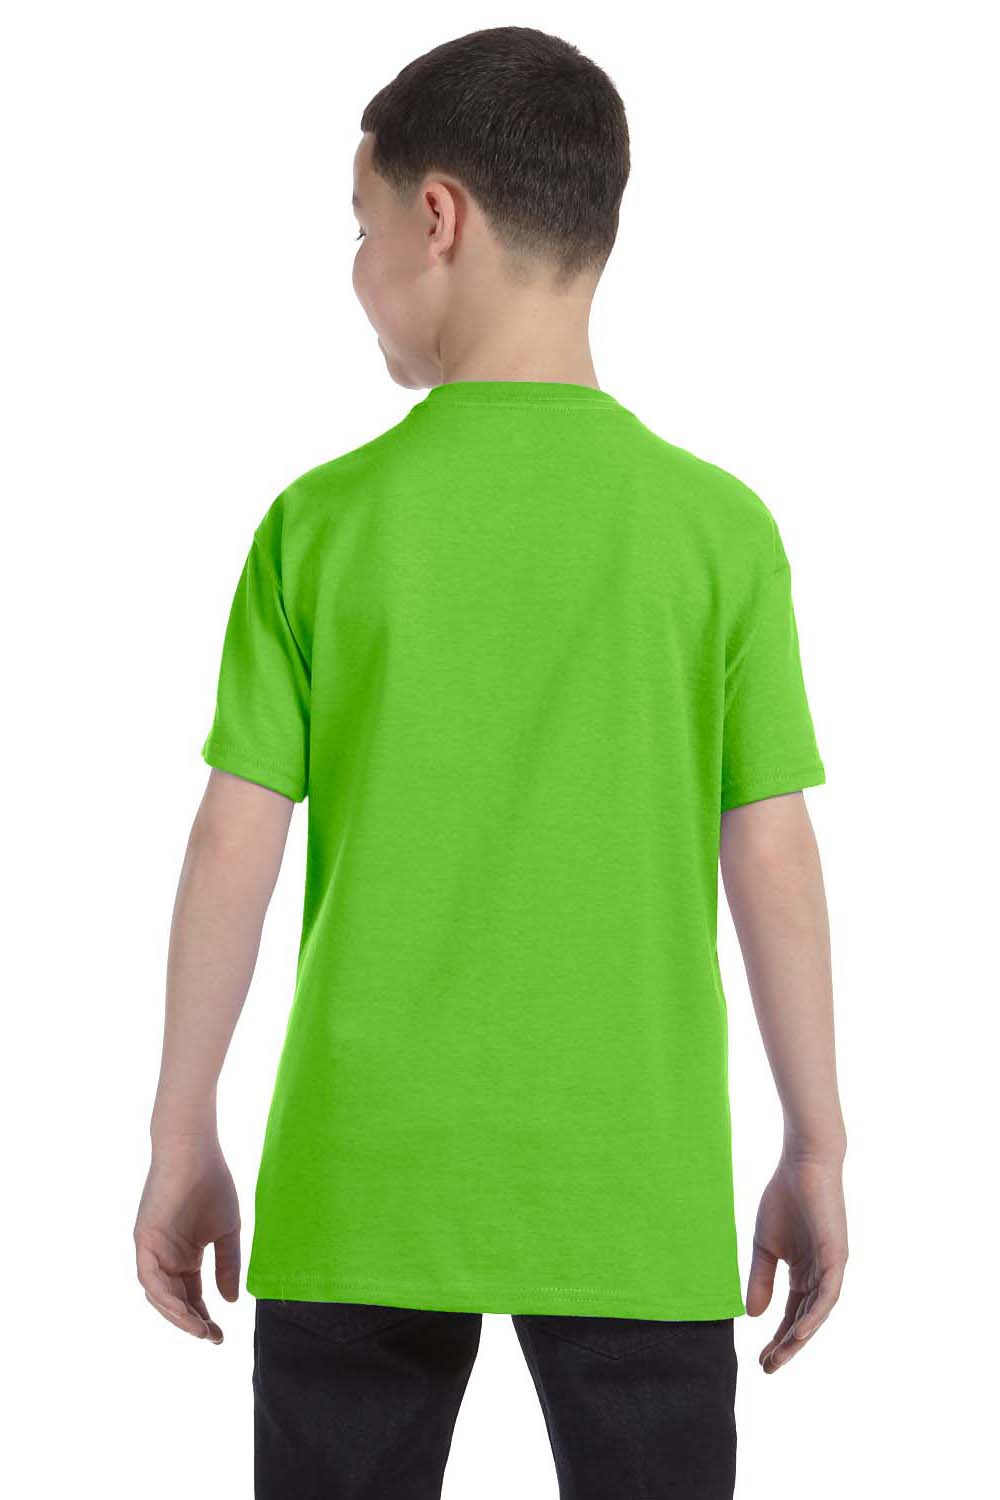 Gildan G500B Youth Short Sleeve Crewneck T-Shirt Lime Green Back